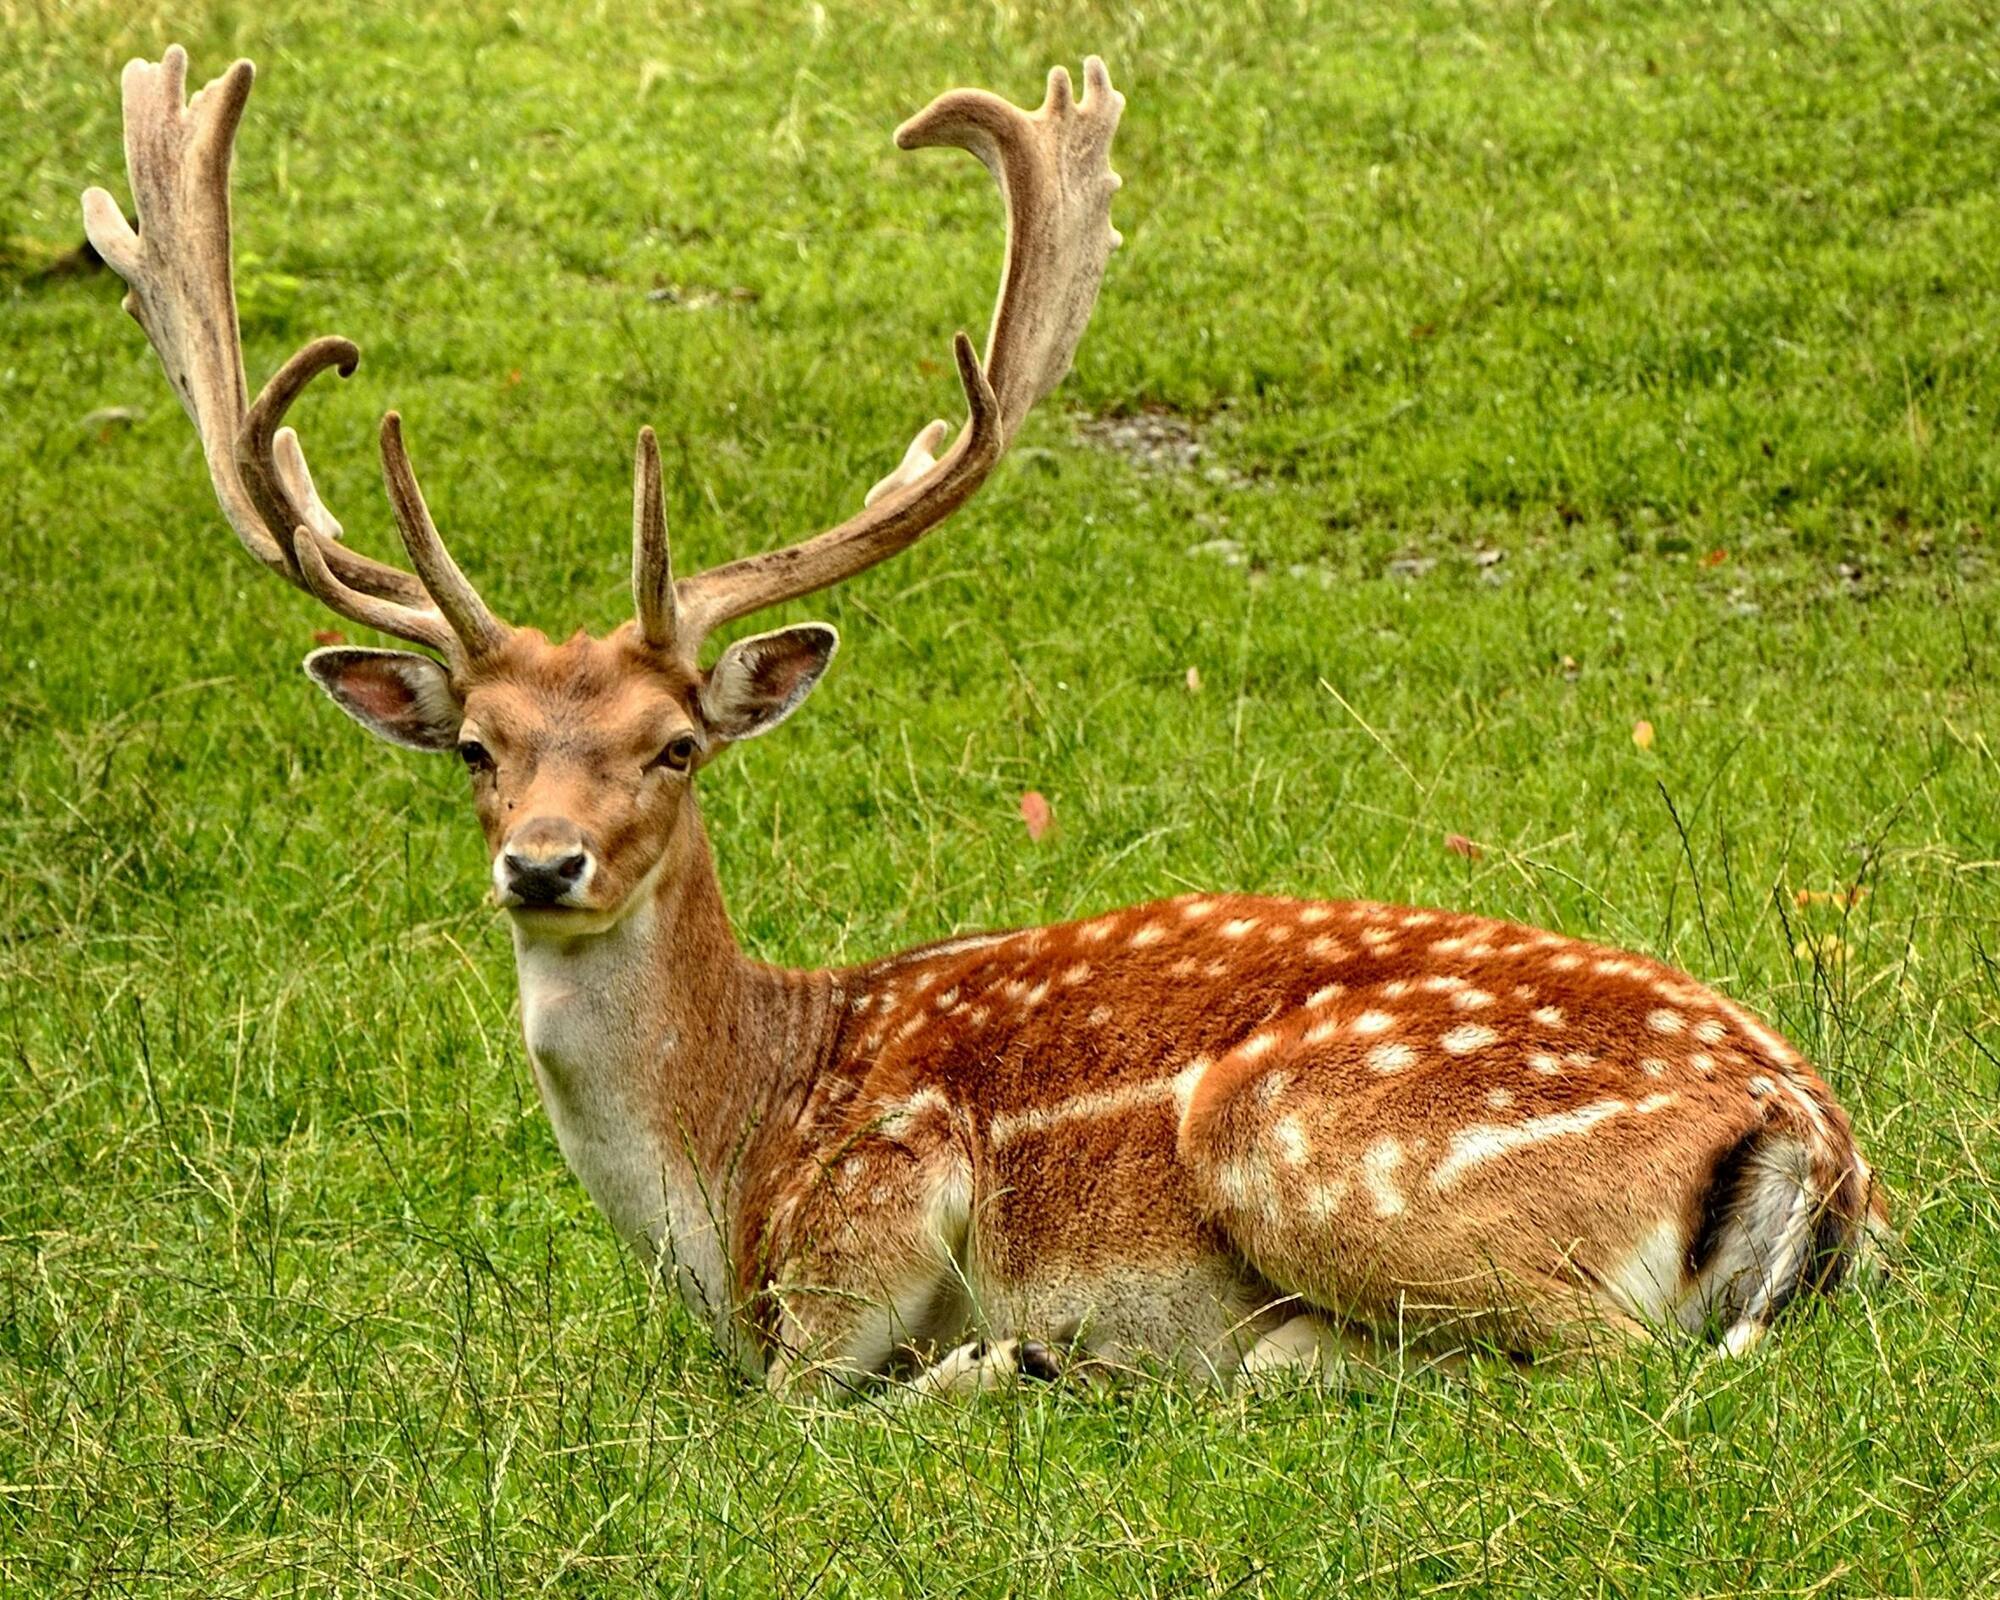 The deer is the spirit animal of Gemini